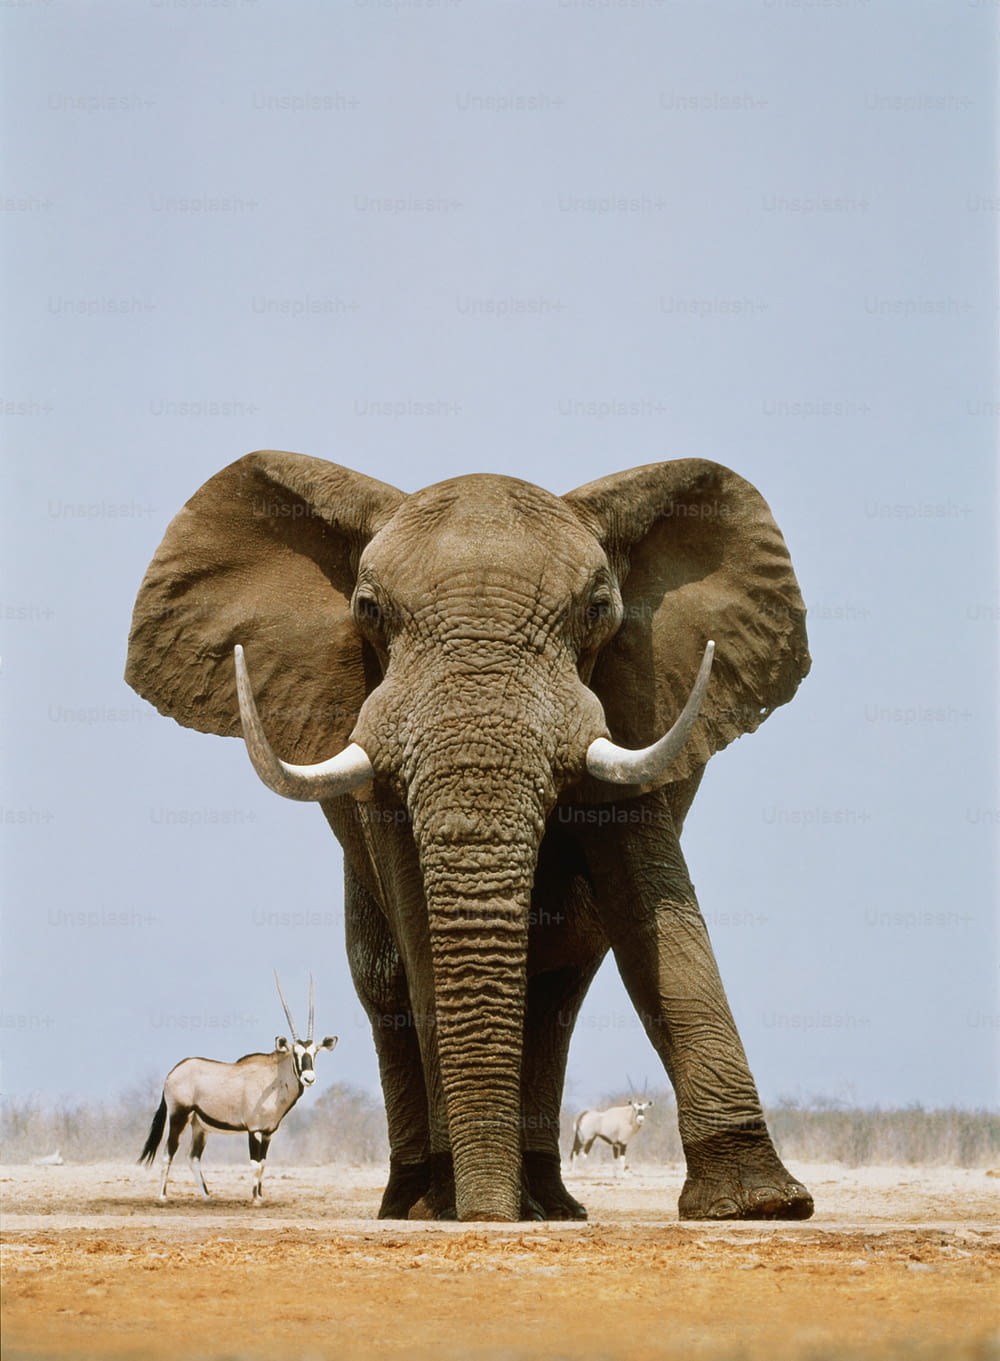 African elephant latin name: Loxodonta africana. Gemsbok latin name: Oryx gazella. African elephants are native throughout Africa south of Sahara. Gemsboks are native to Namibia, Angola, Botswana, Zimbabwe, Tanzania and South Africa.